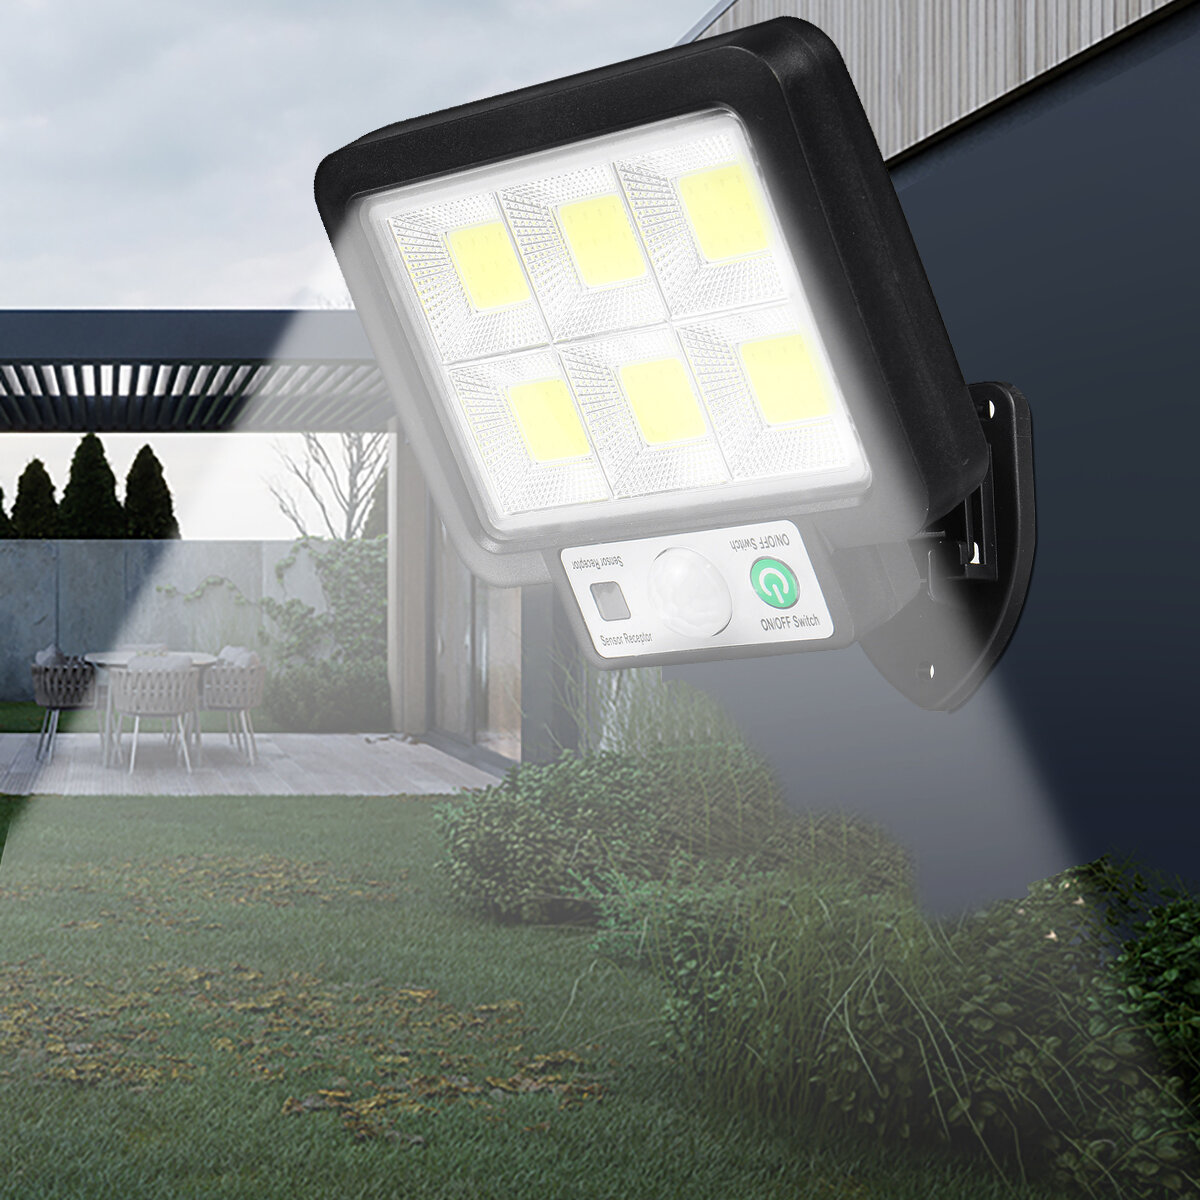 56/72 COB Split LED Solar القوة Street ضوء PIR Motion المستشعر مصباح حائط أمان ضد للماء حديقة خارجية مع التحكم عن بعد مر